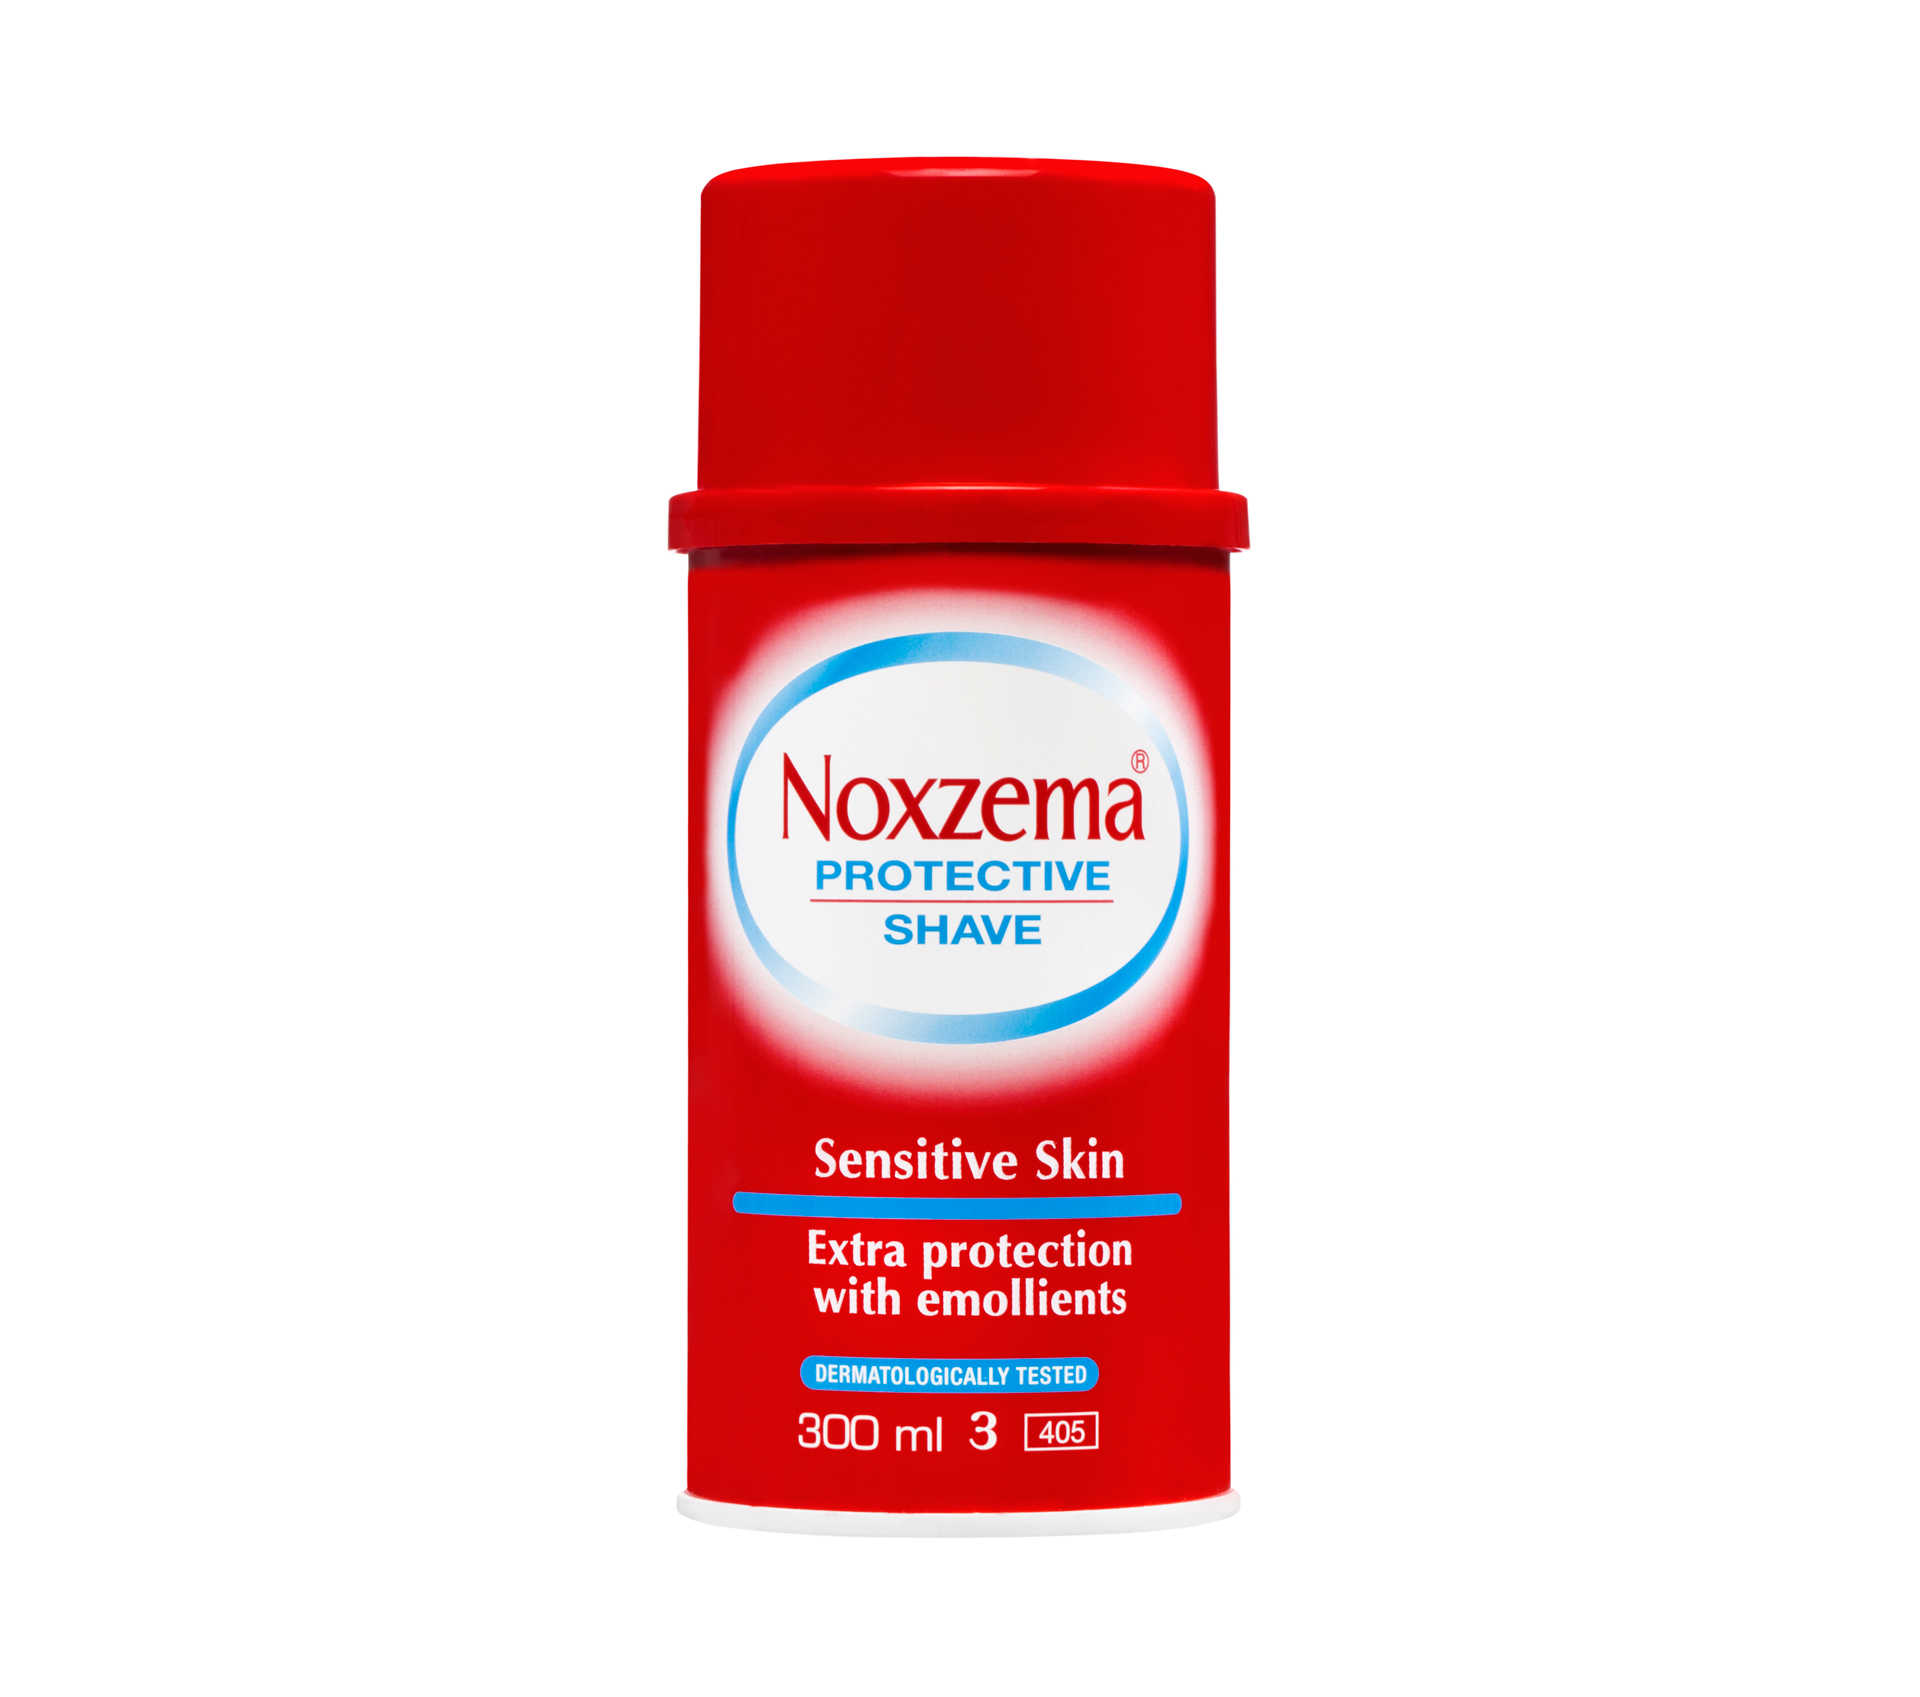 Noxzema Protective Shave